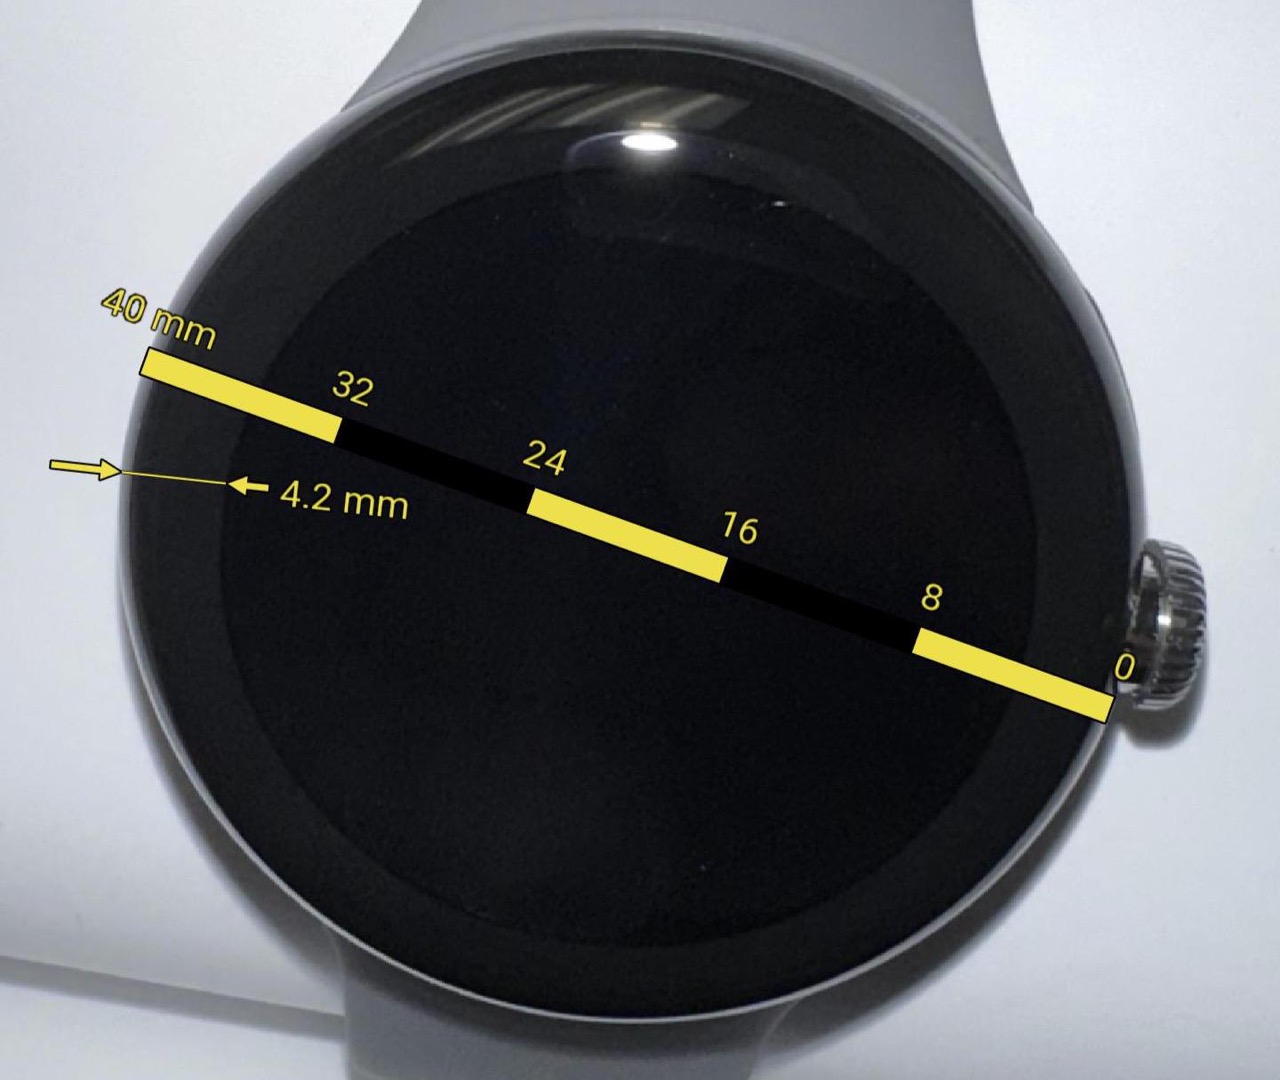 Pixel Watchの大きさとベゼル幅